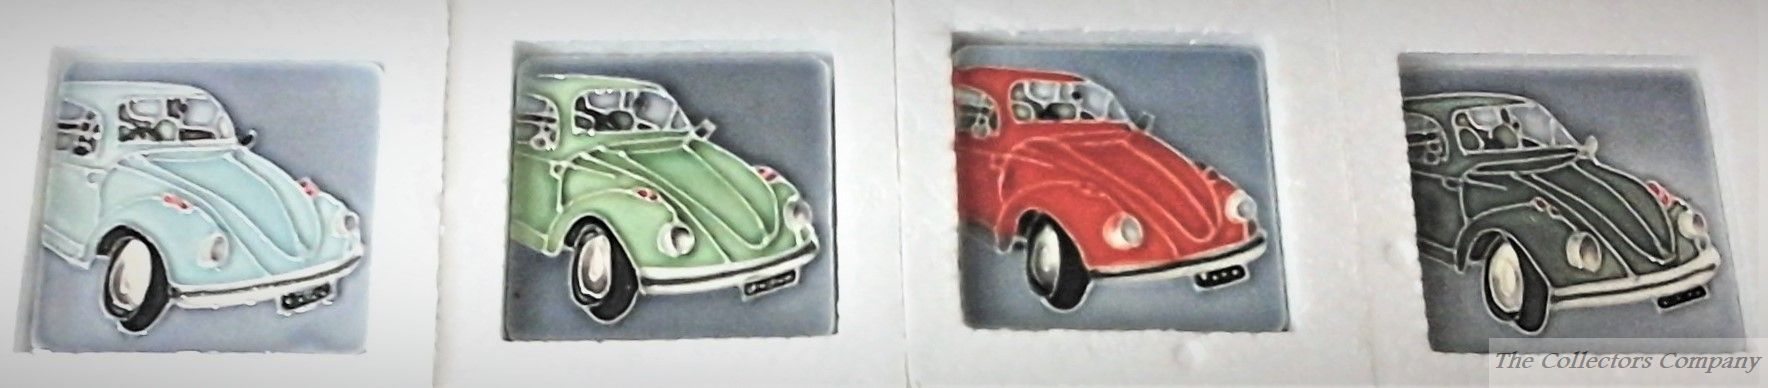 05358 VW Beetle Ceramic Magnets